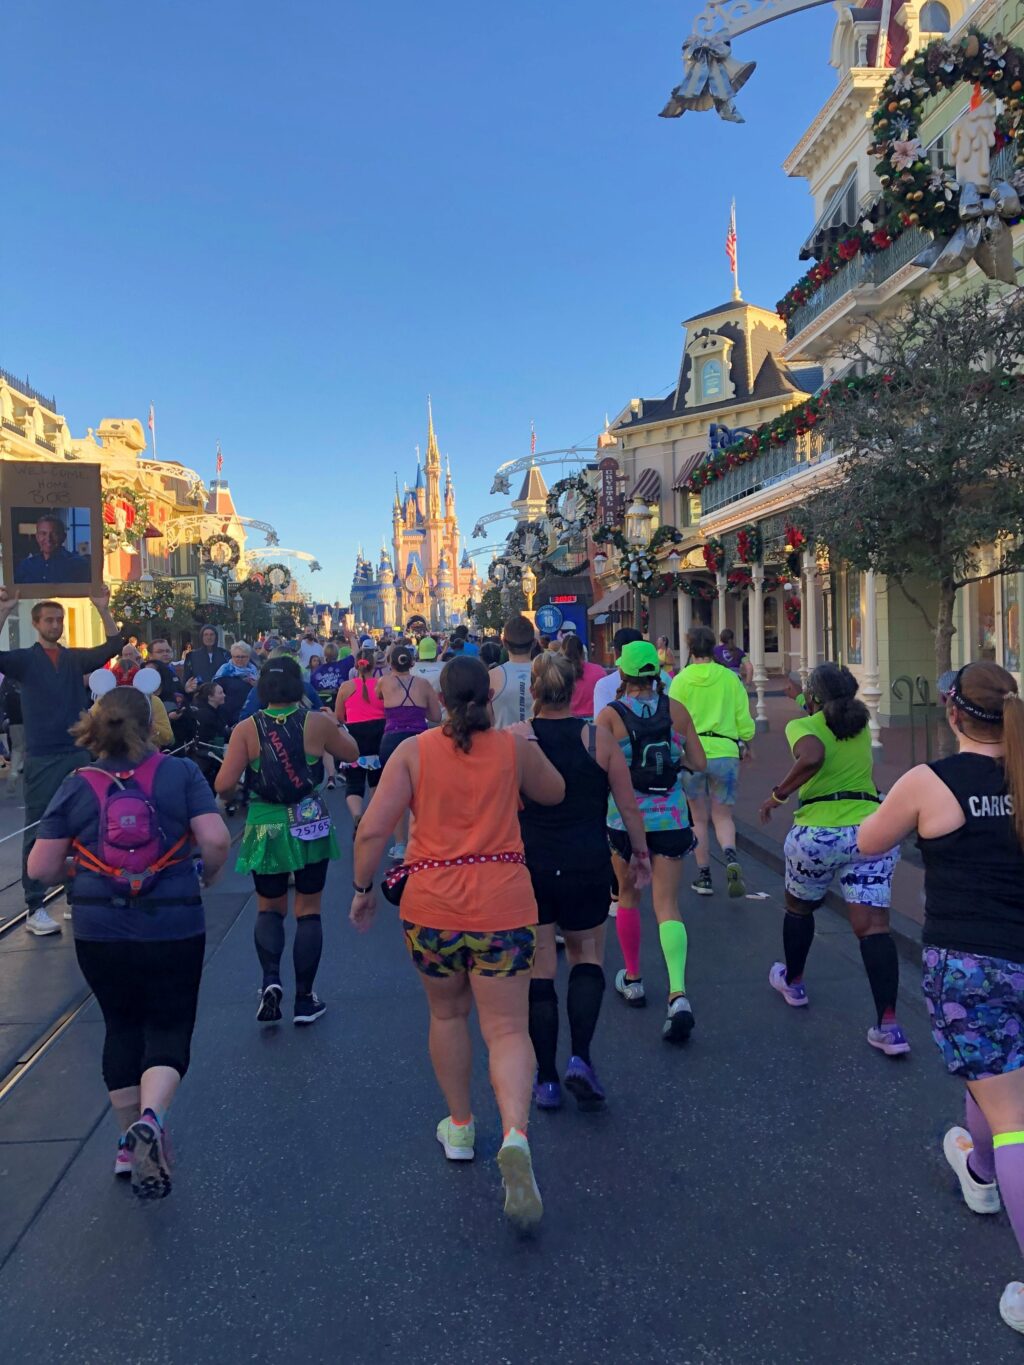 Runners participating in the Disney Marathon heading down Main Street of the Disney Kingdom.